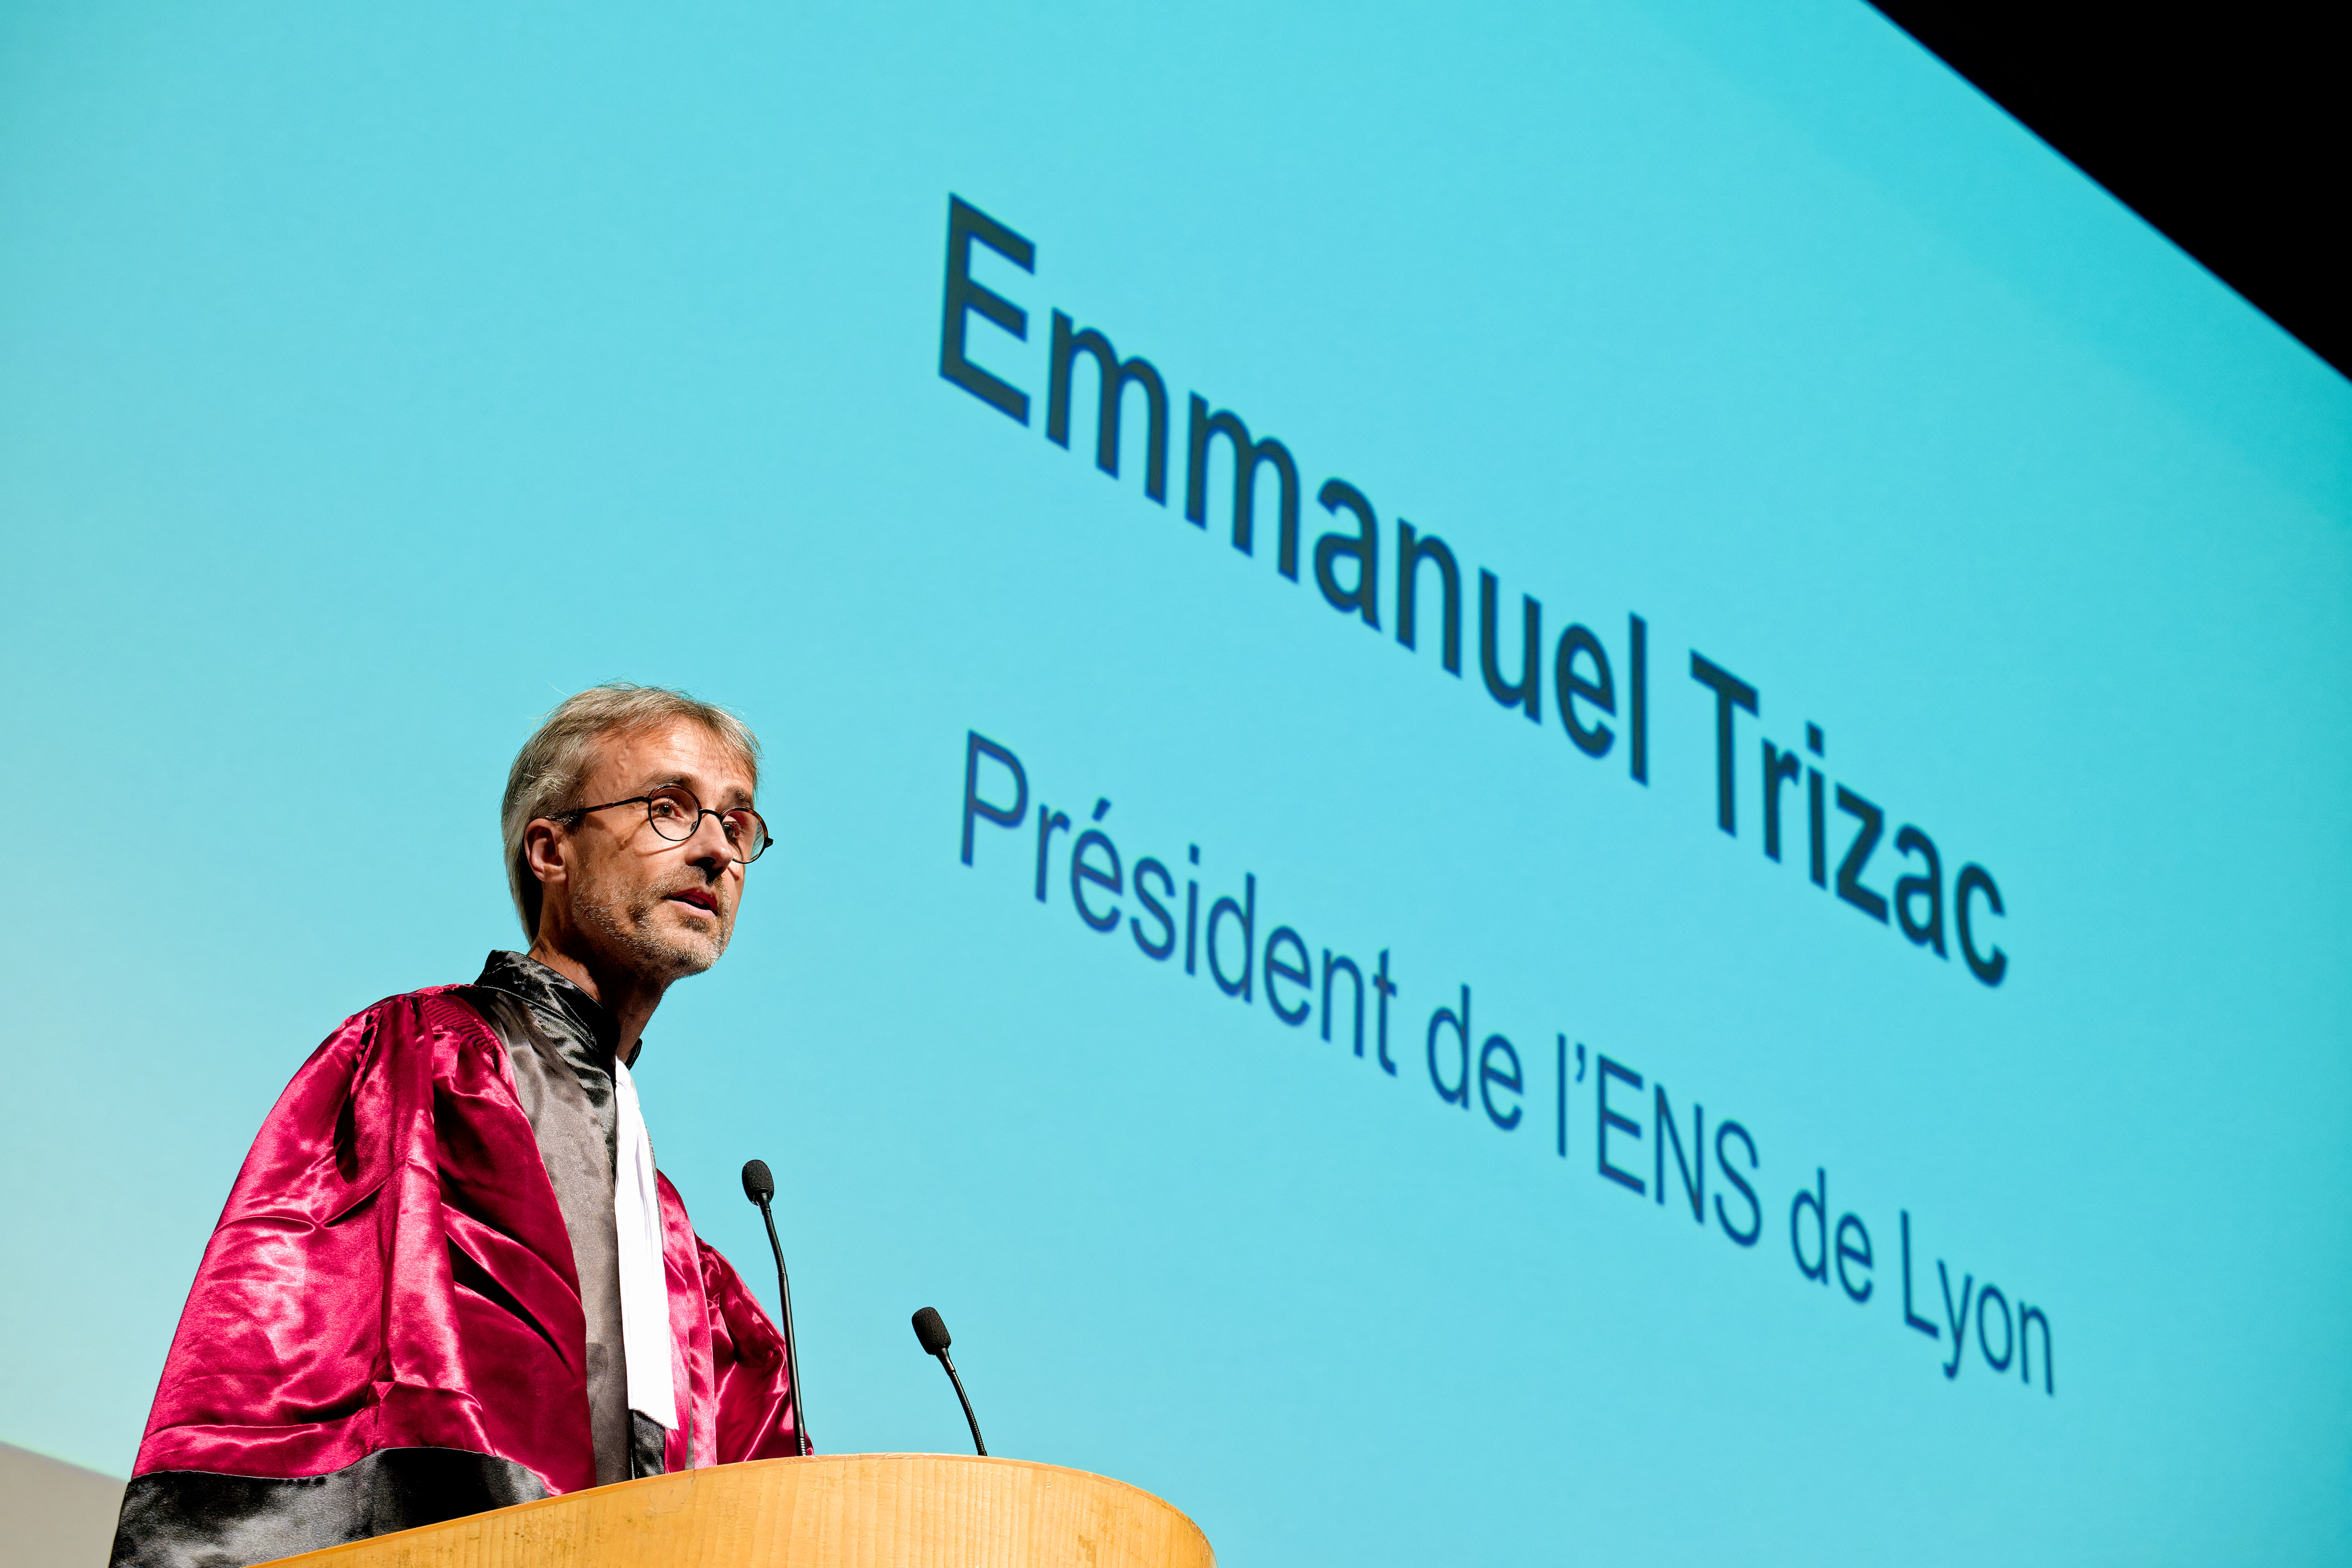 Emmanuel Trizac, président de l'ENS de Lyon